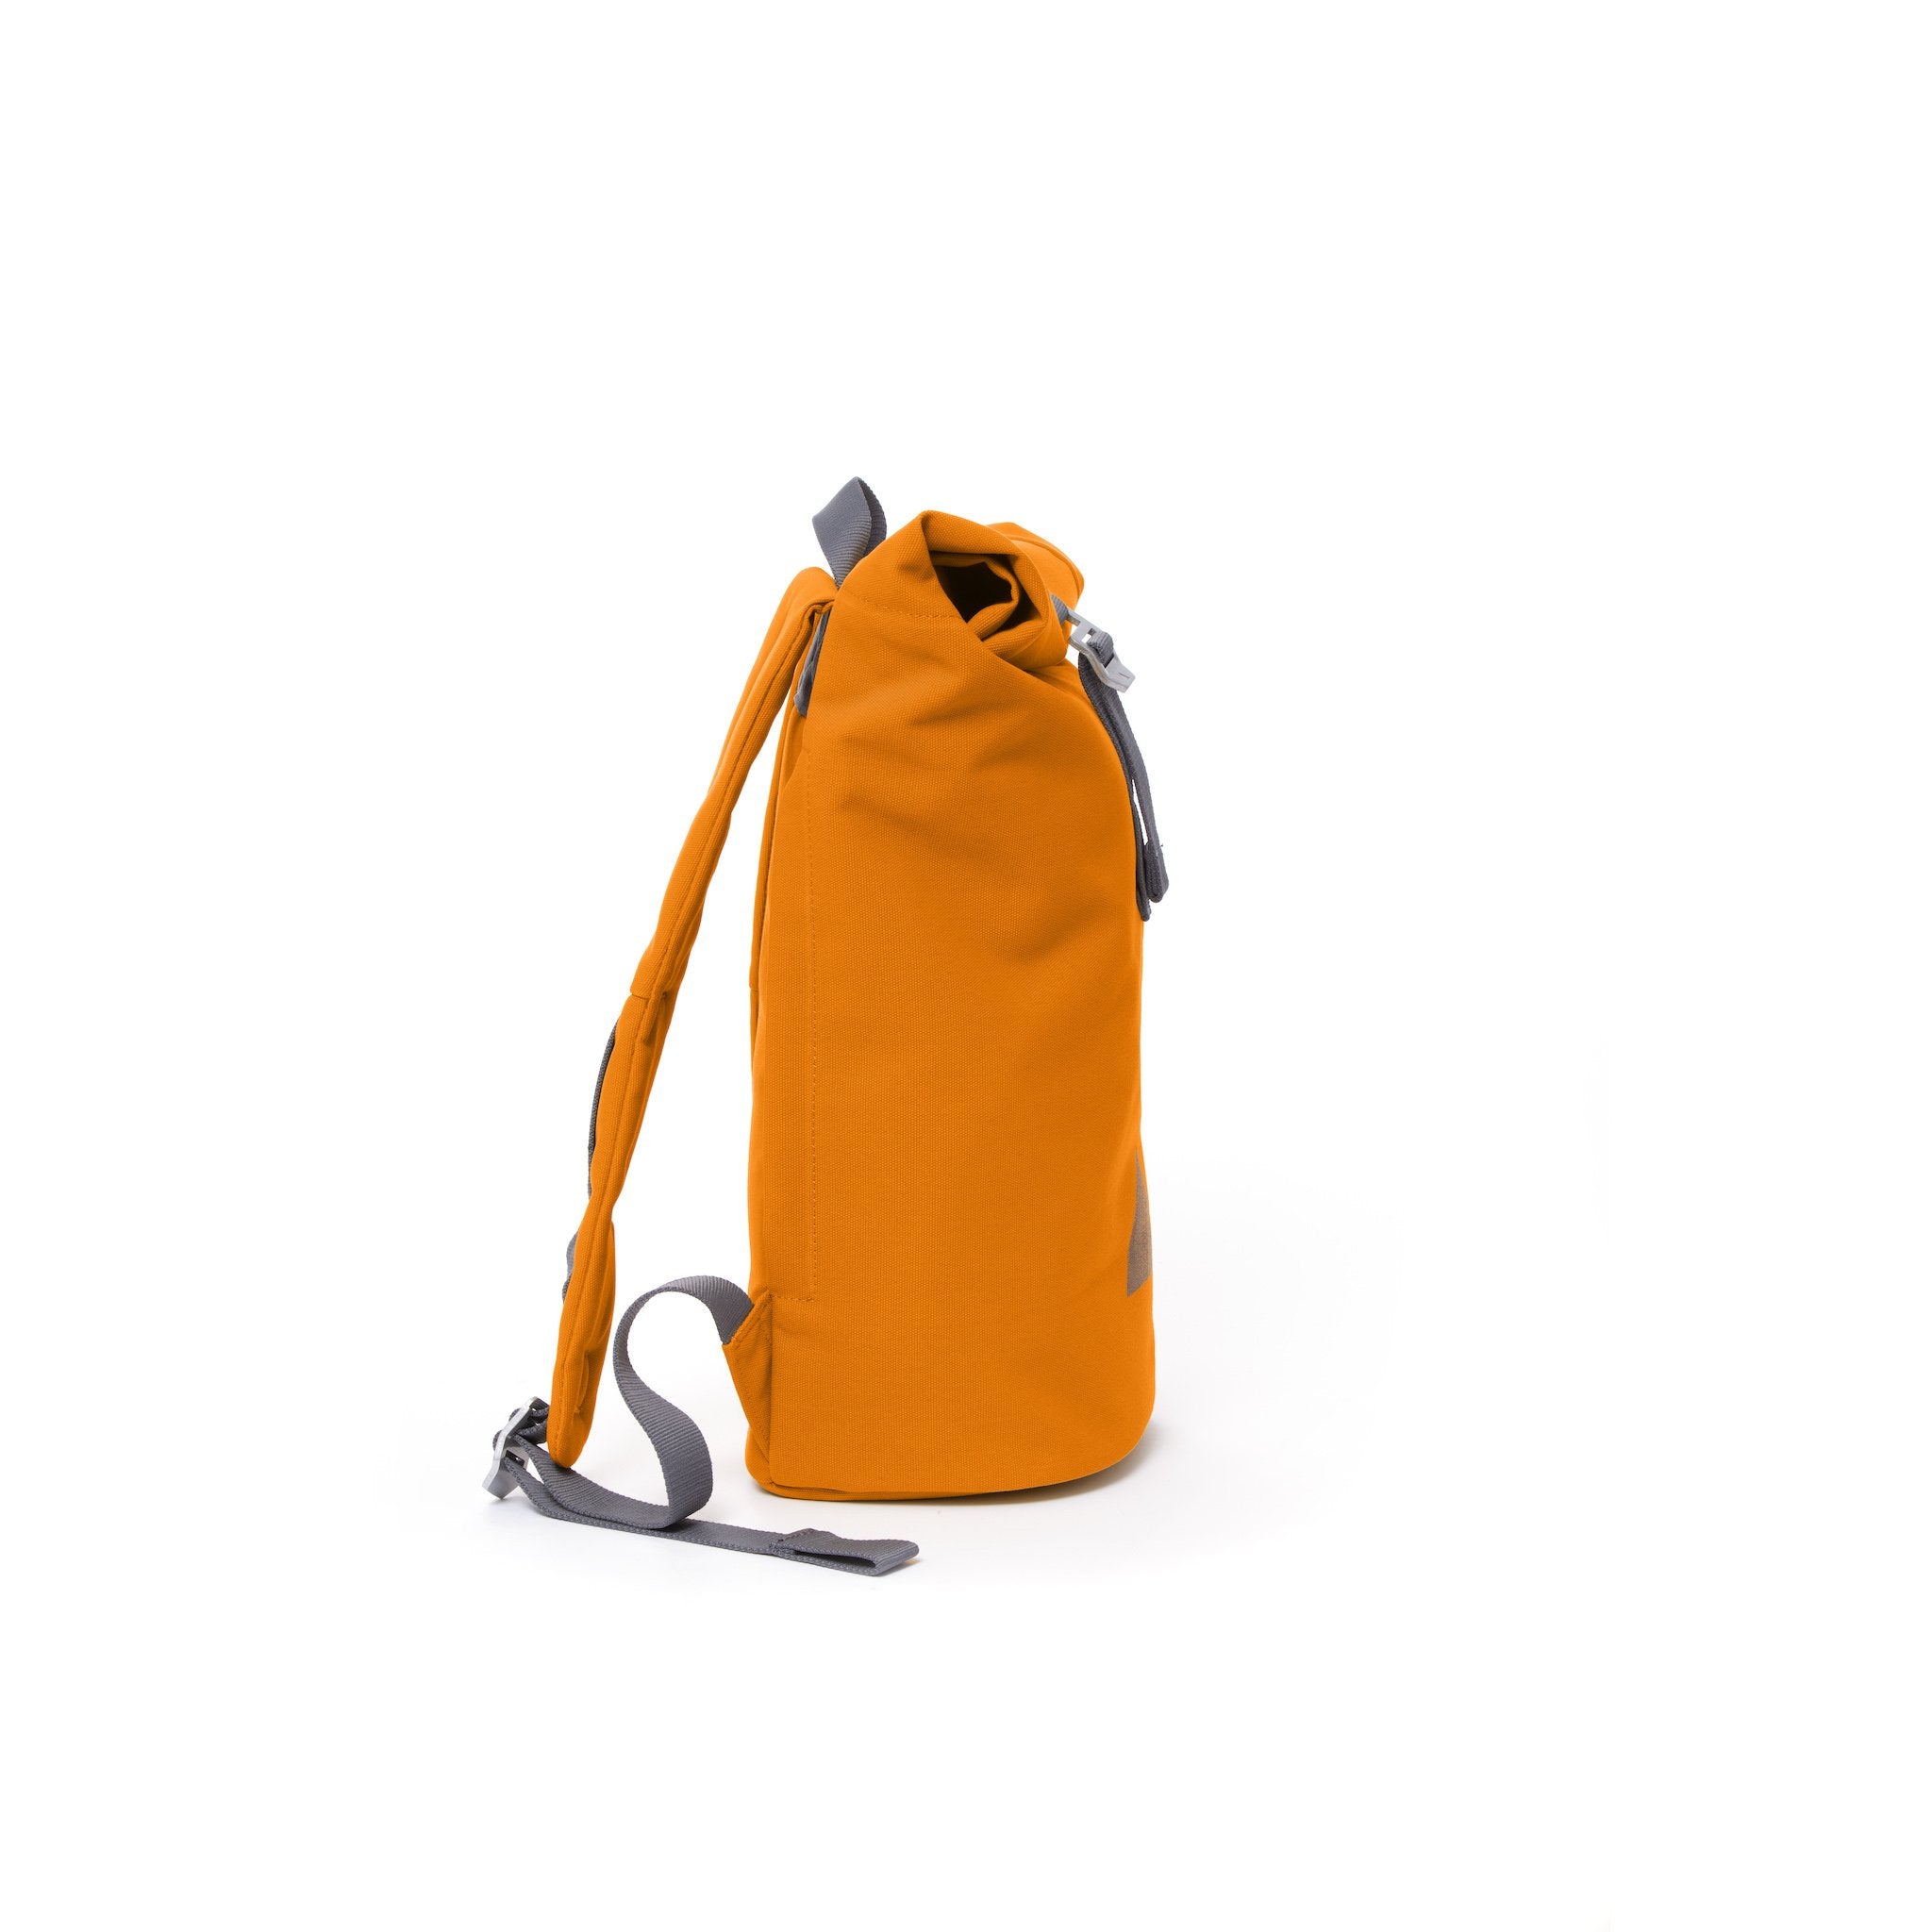 Orange waterproof canvas women’s rolltop backpack.